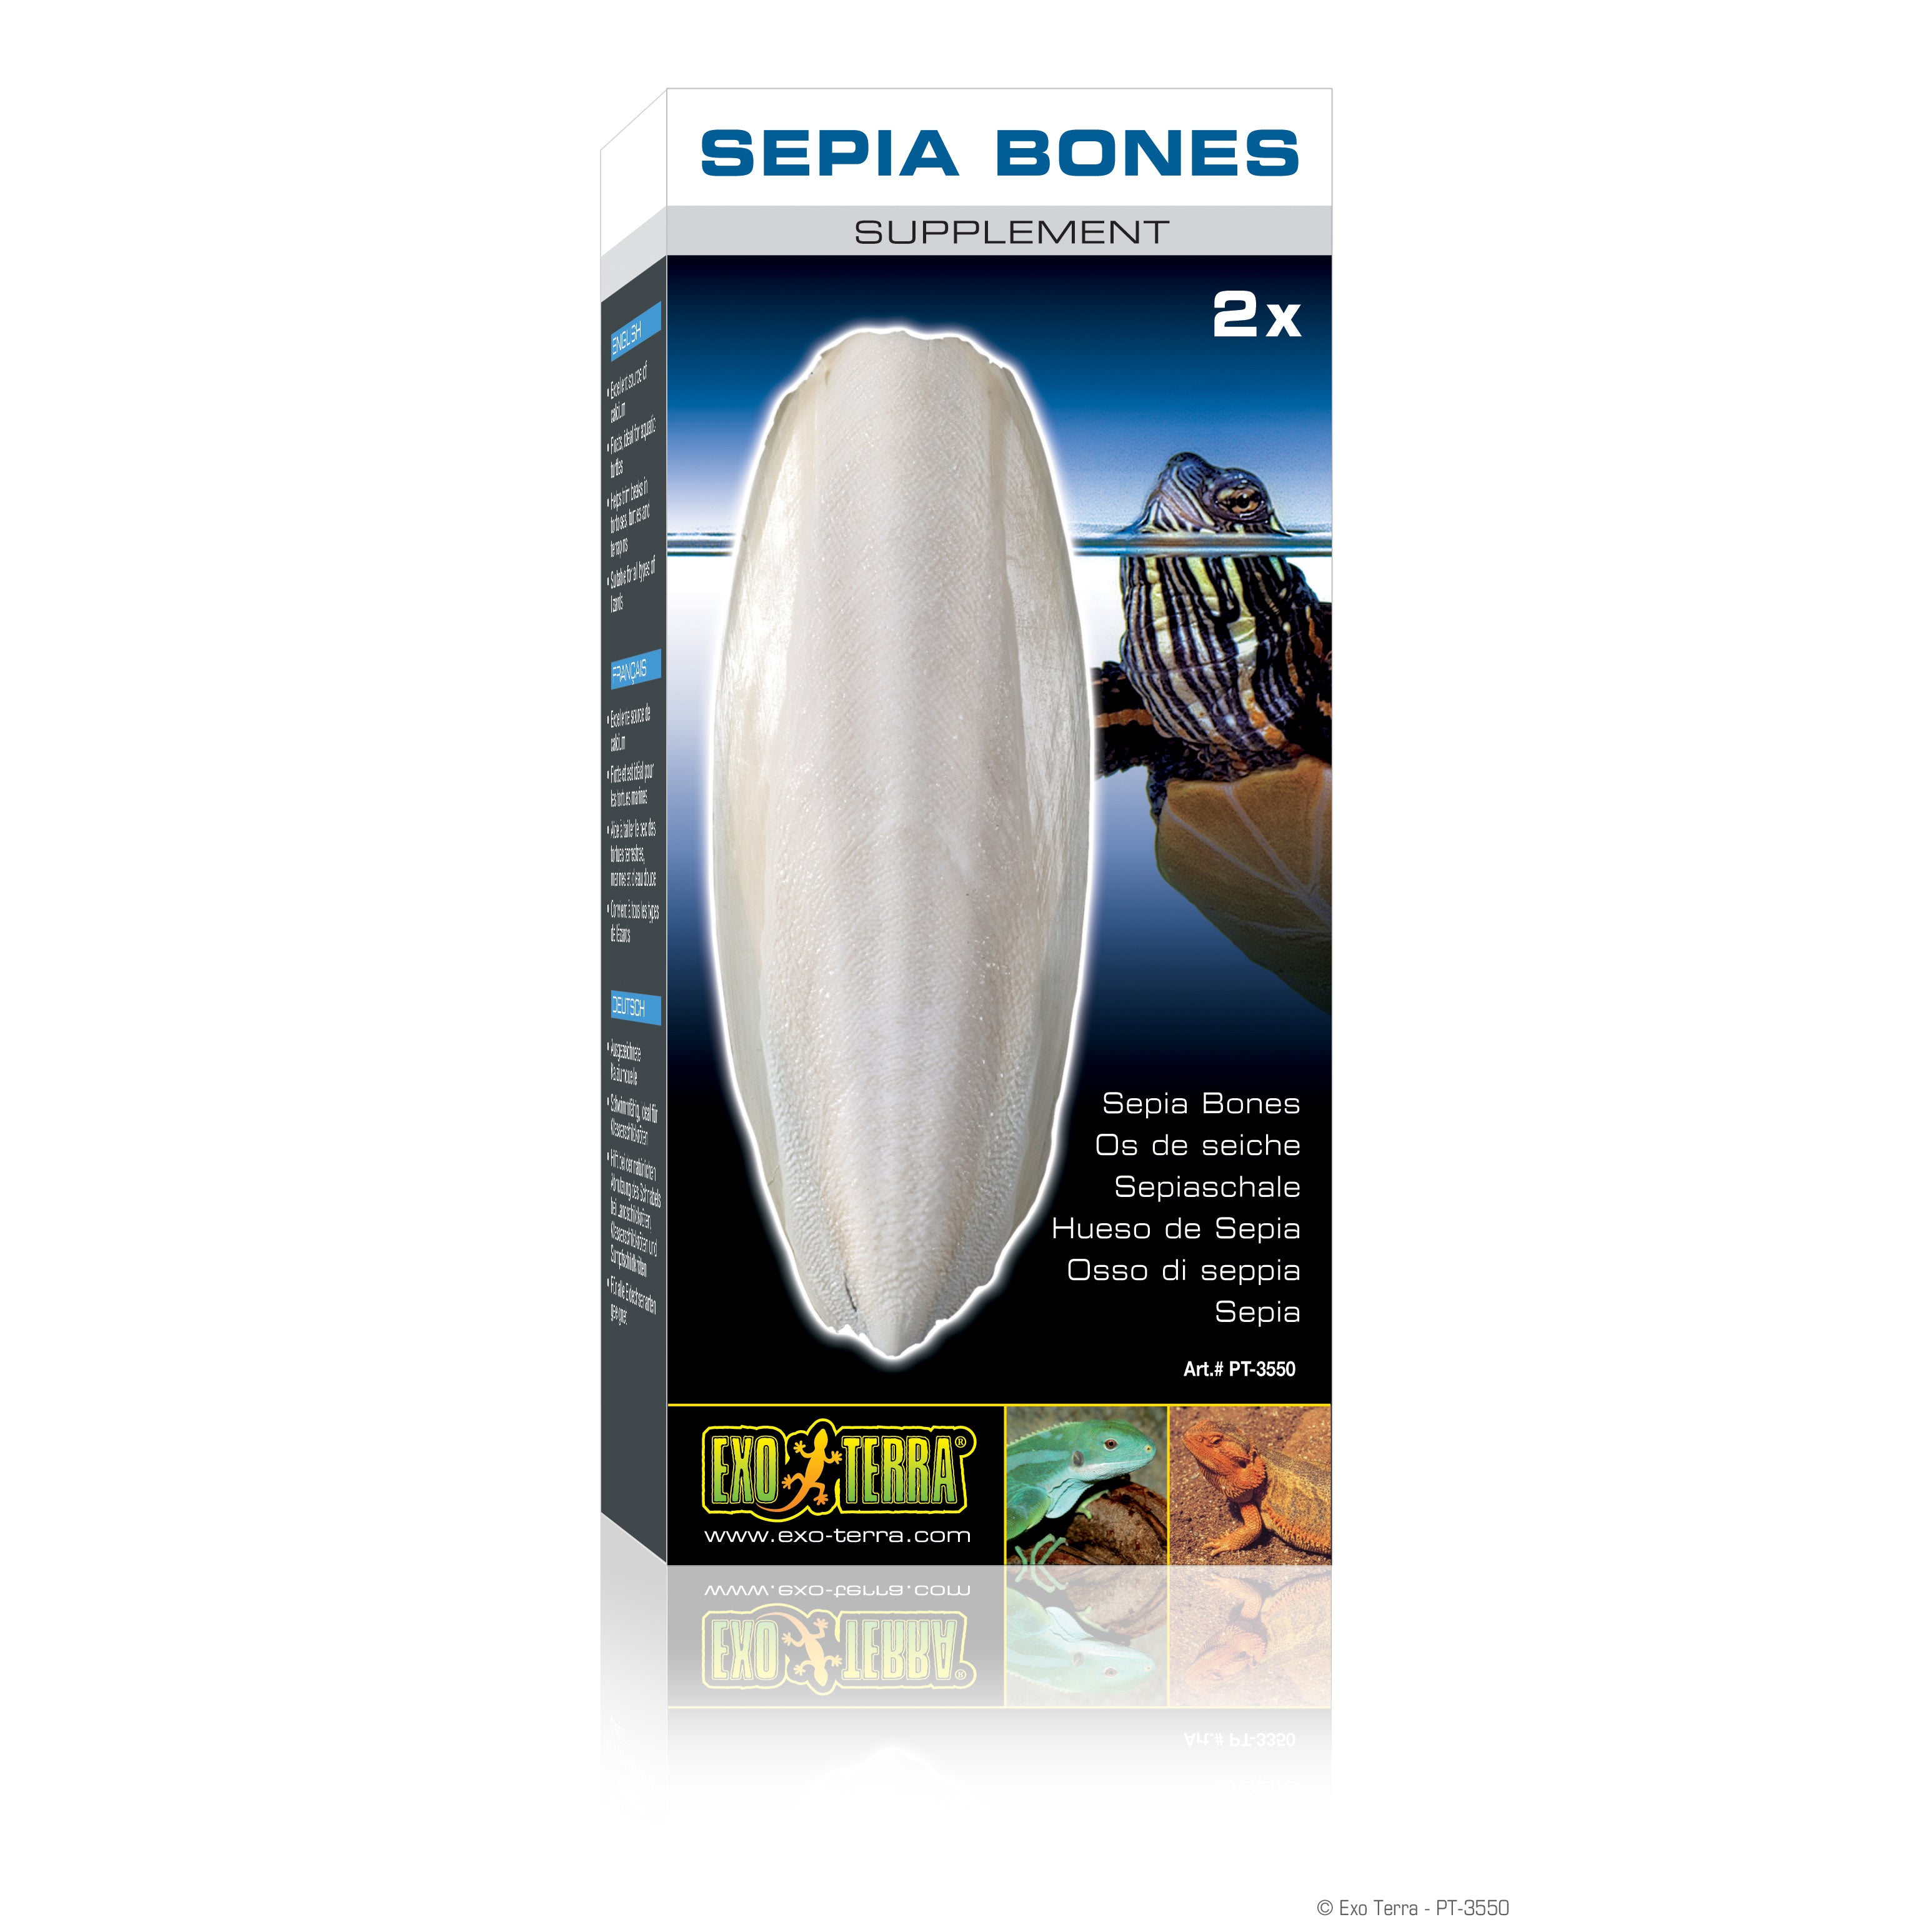 Exo Terra Sepia(Cuttlefish) Bones Supplement - 2 pieces